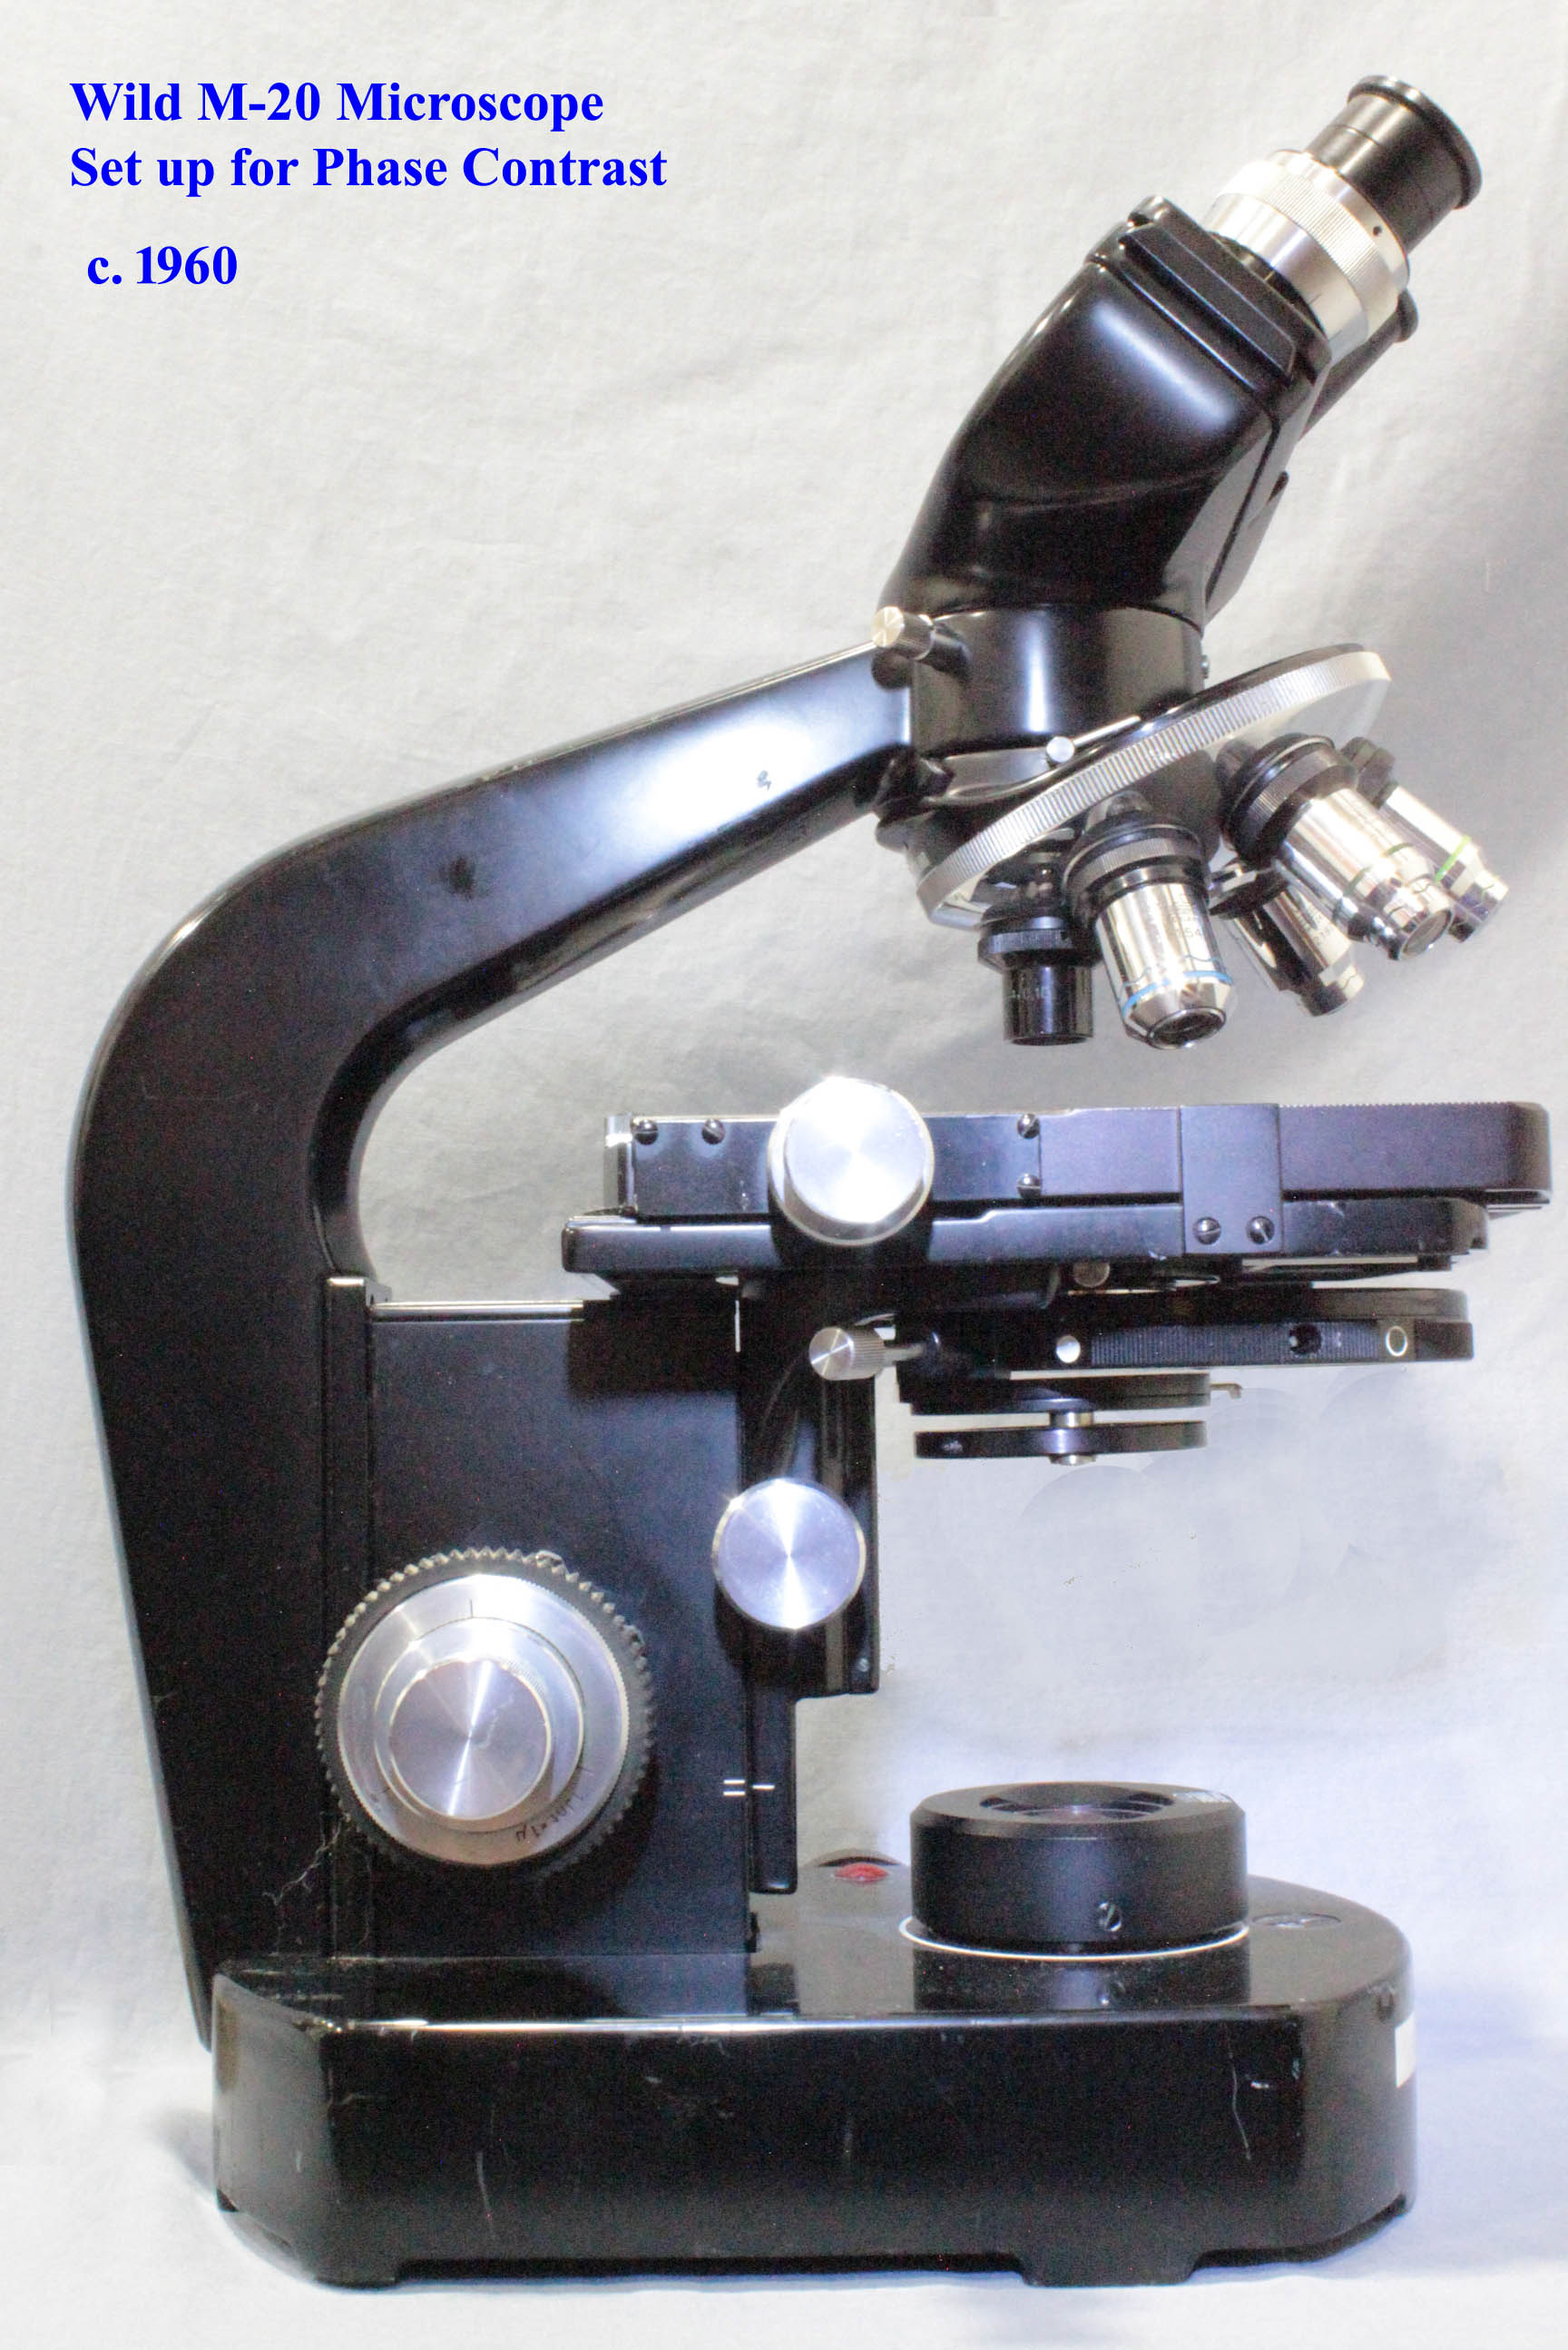 Wild M20 Phase Contrast microscope